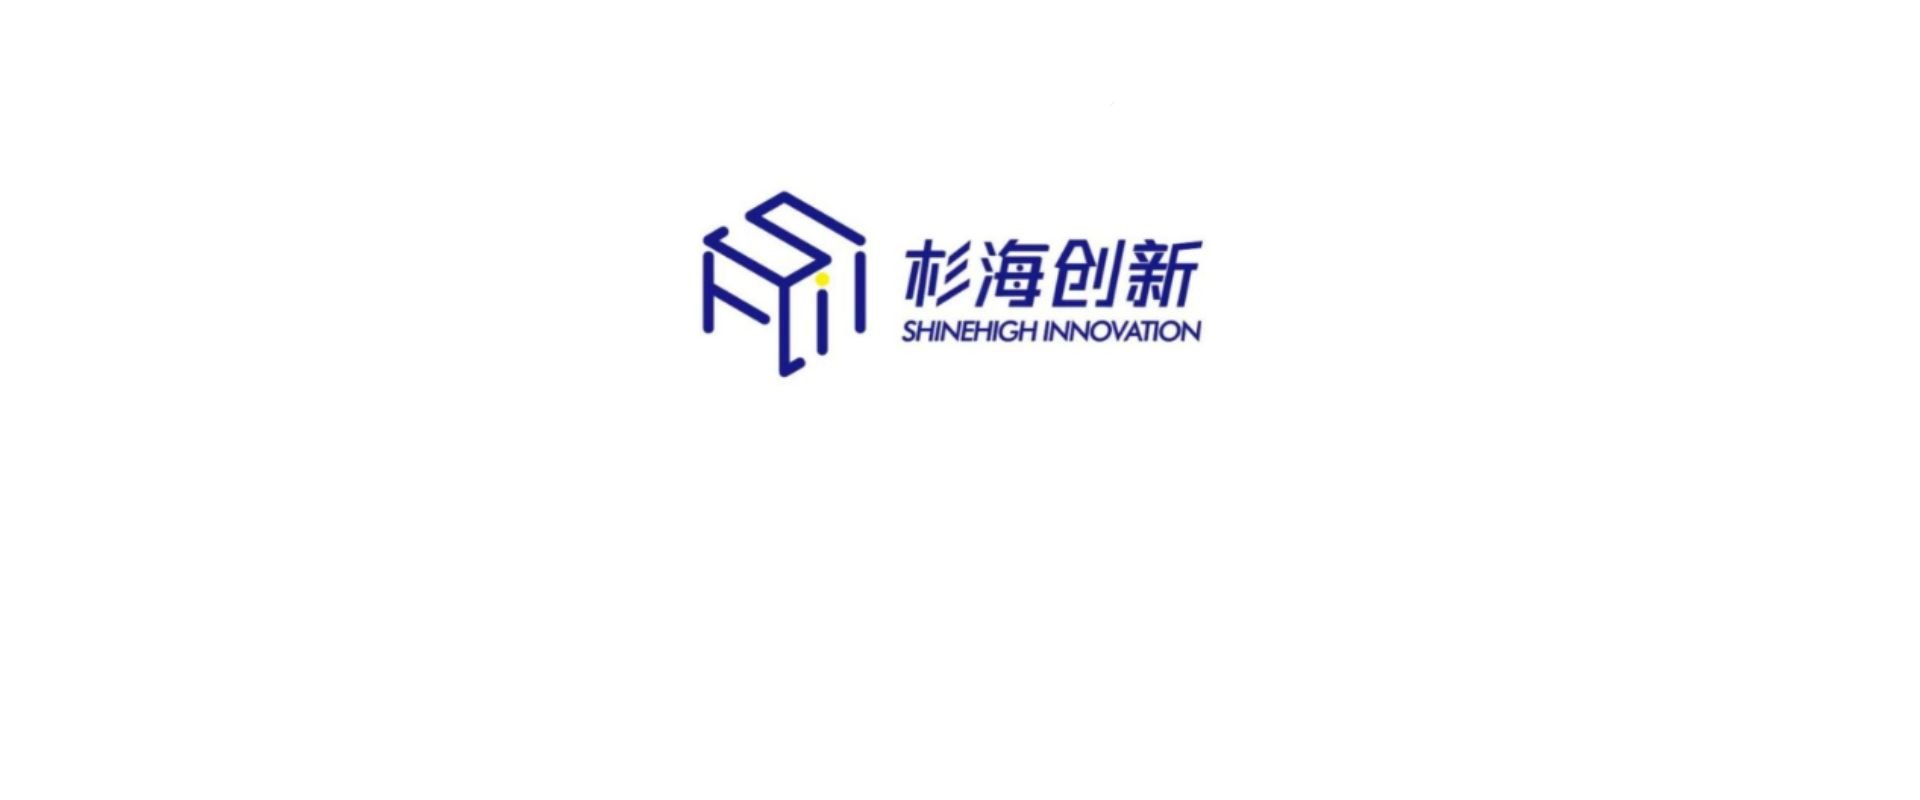 inversion de loreal en empresa de biotecnologia china shinehigh innovation hero